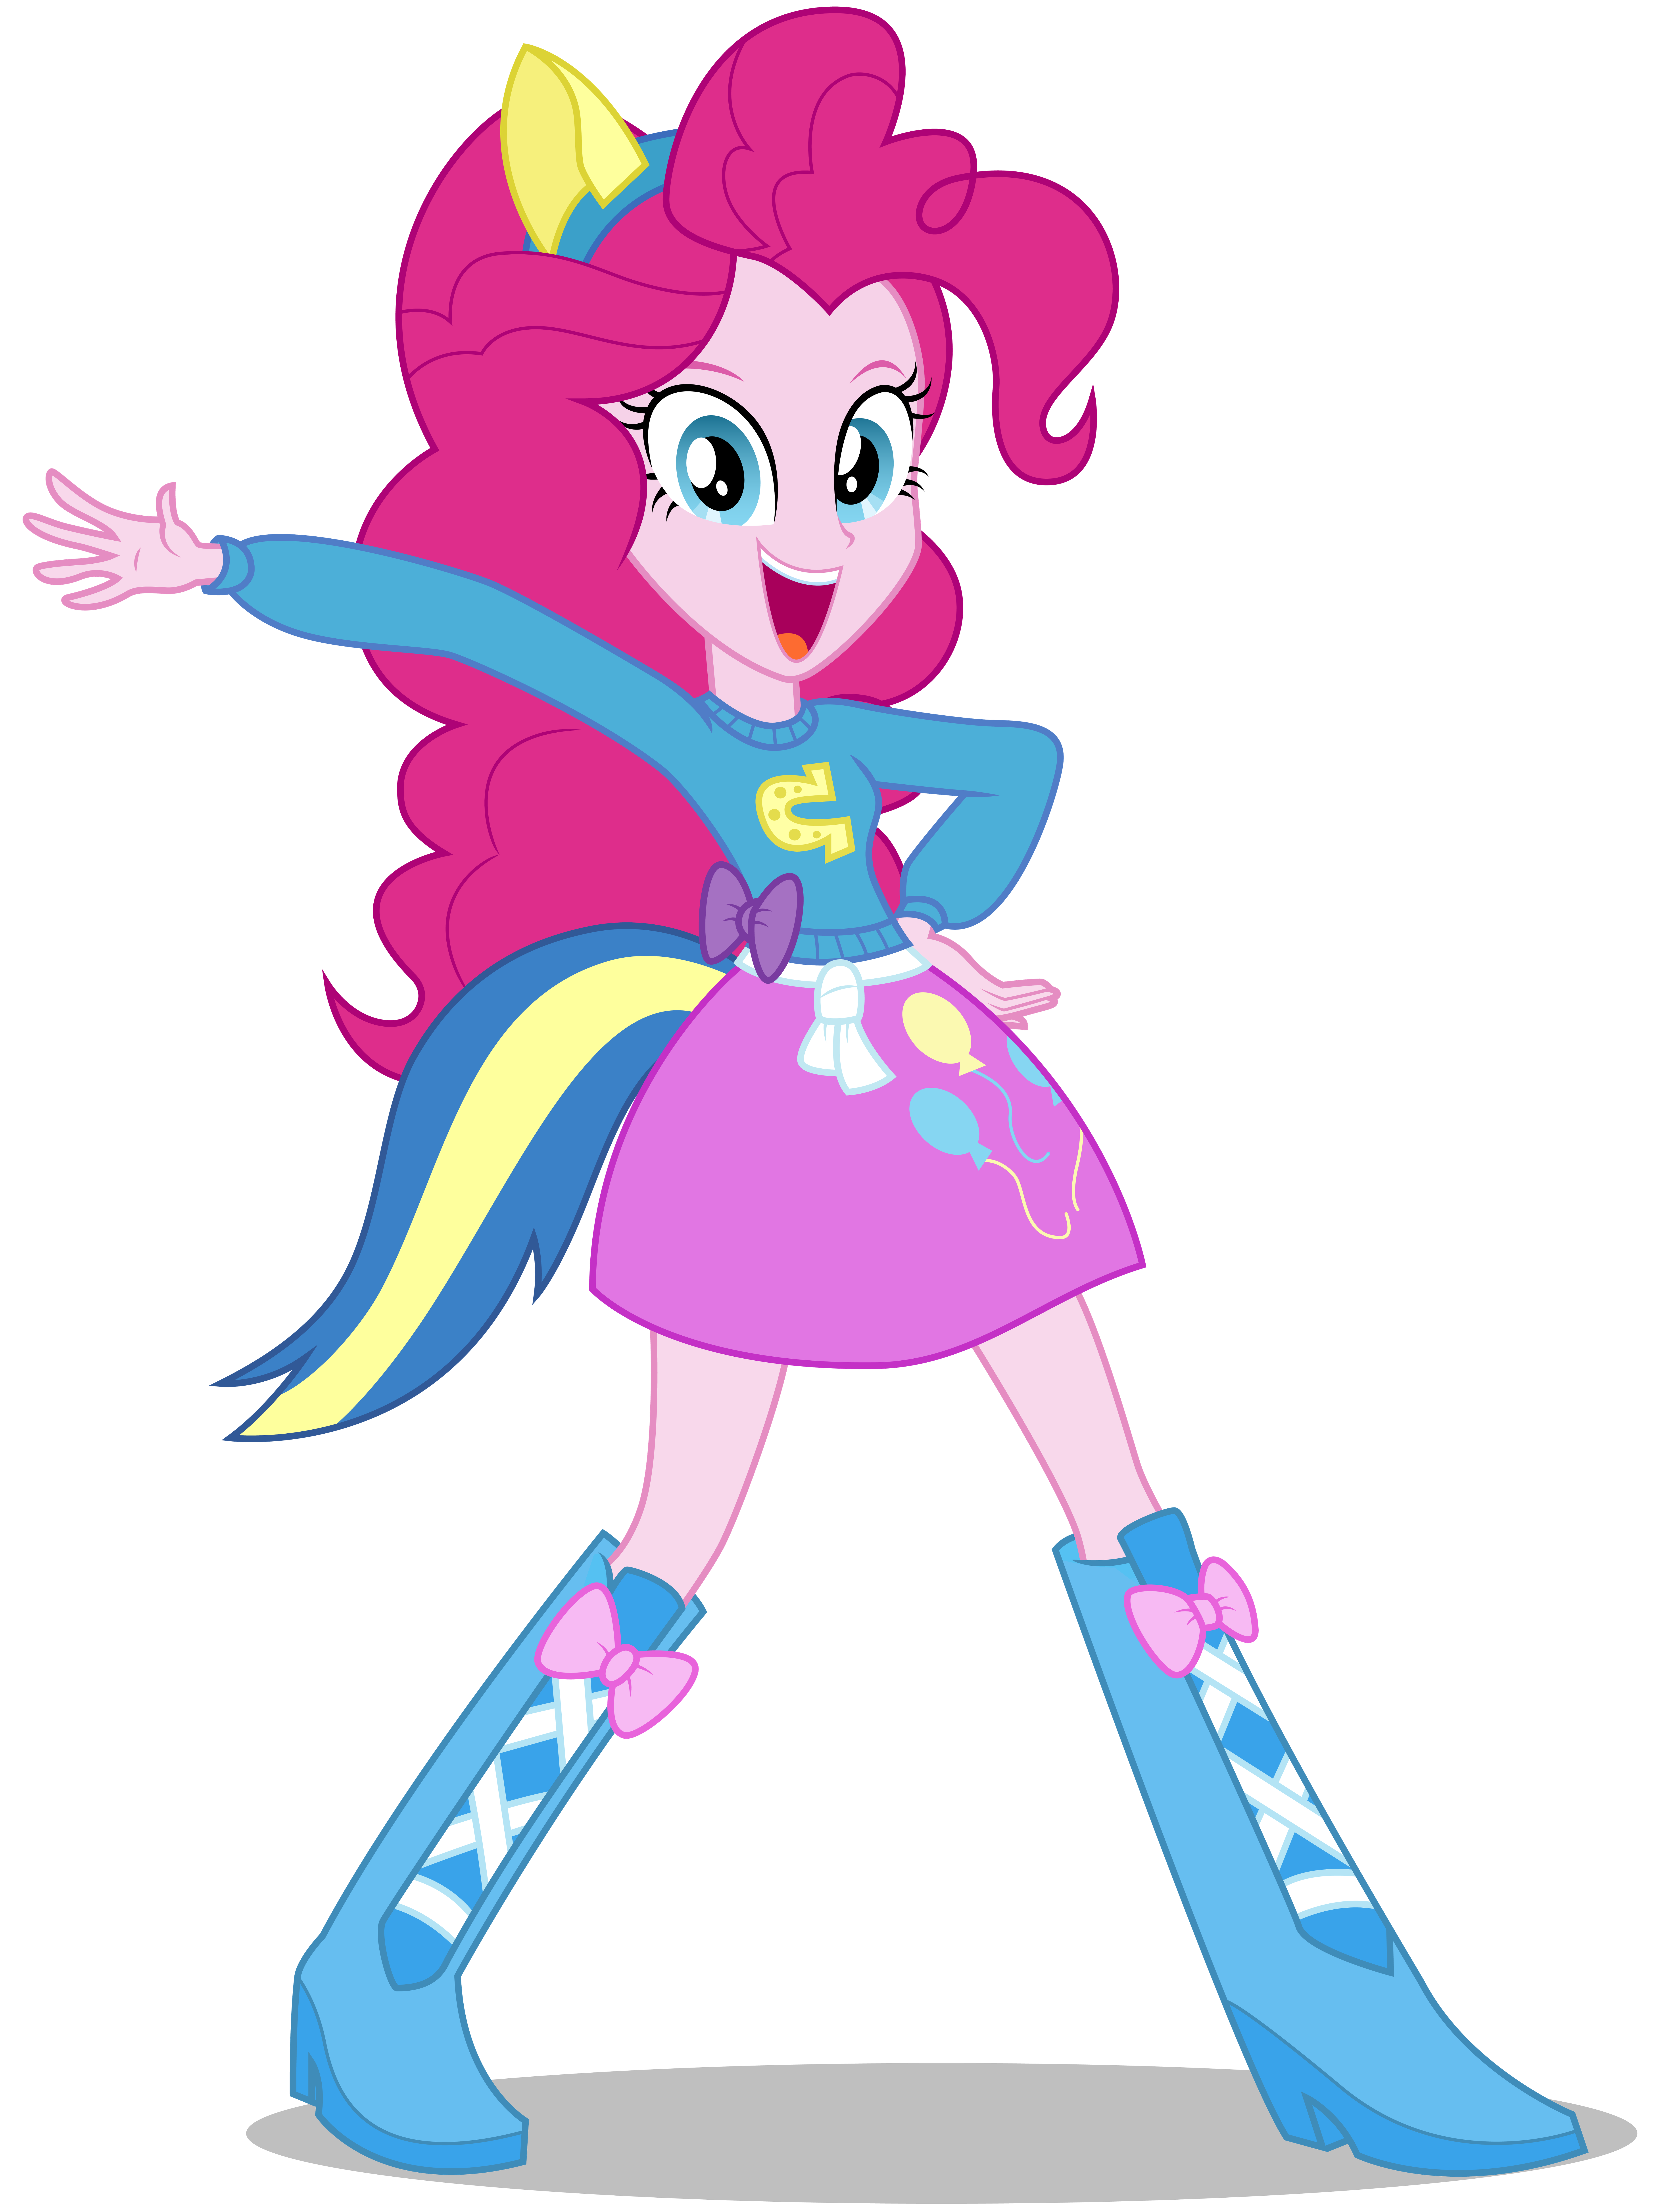 Pinkie Pie EqG: Wondercolts Pose